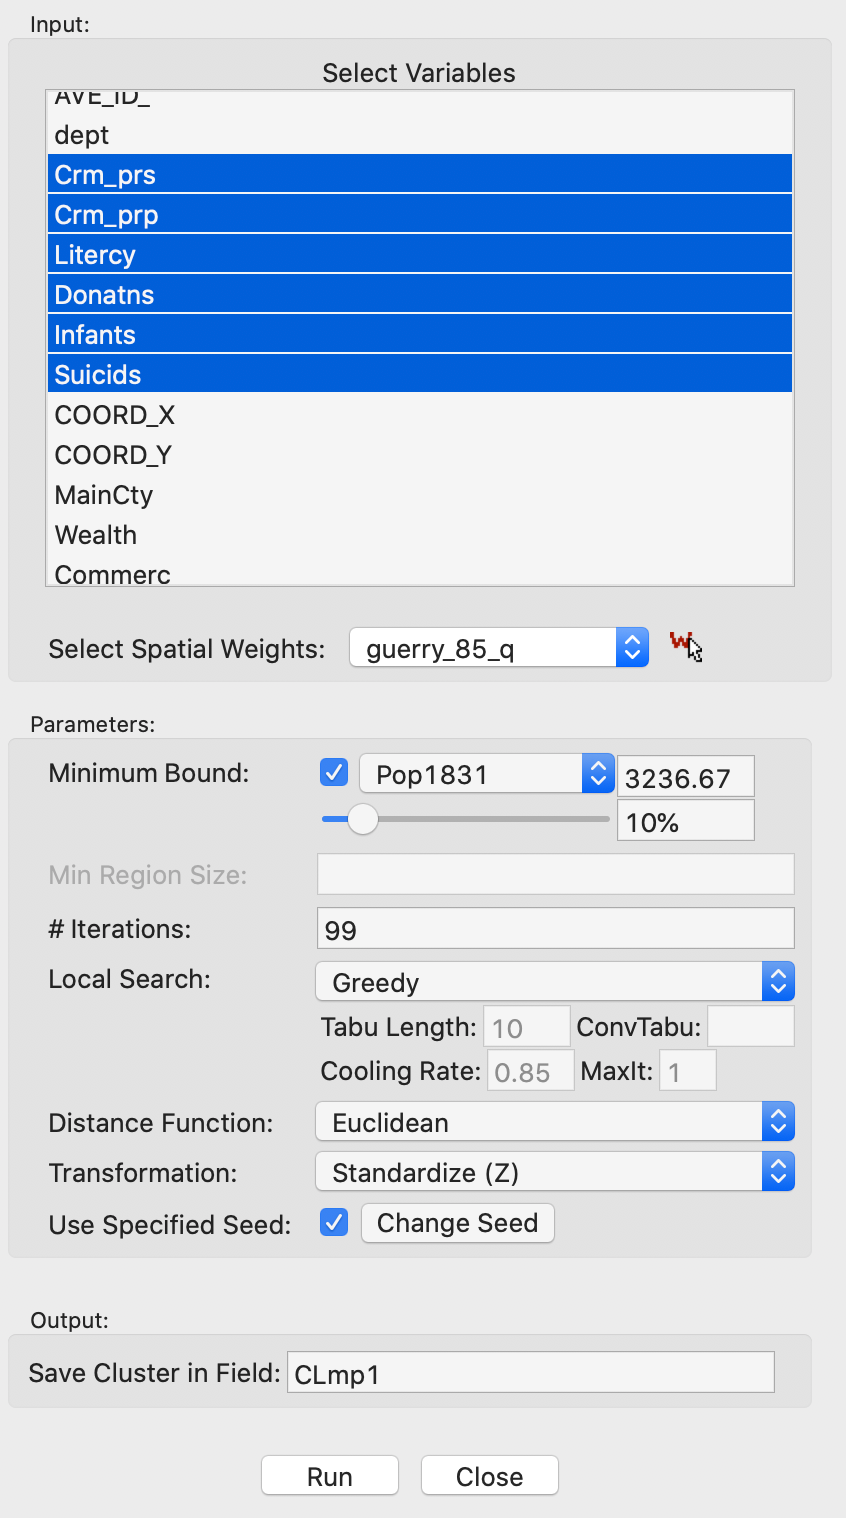 Max-p variables and parameter settings